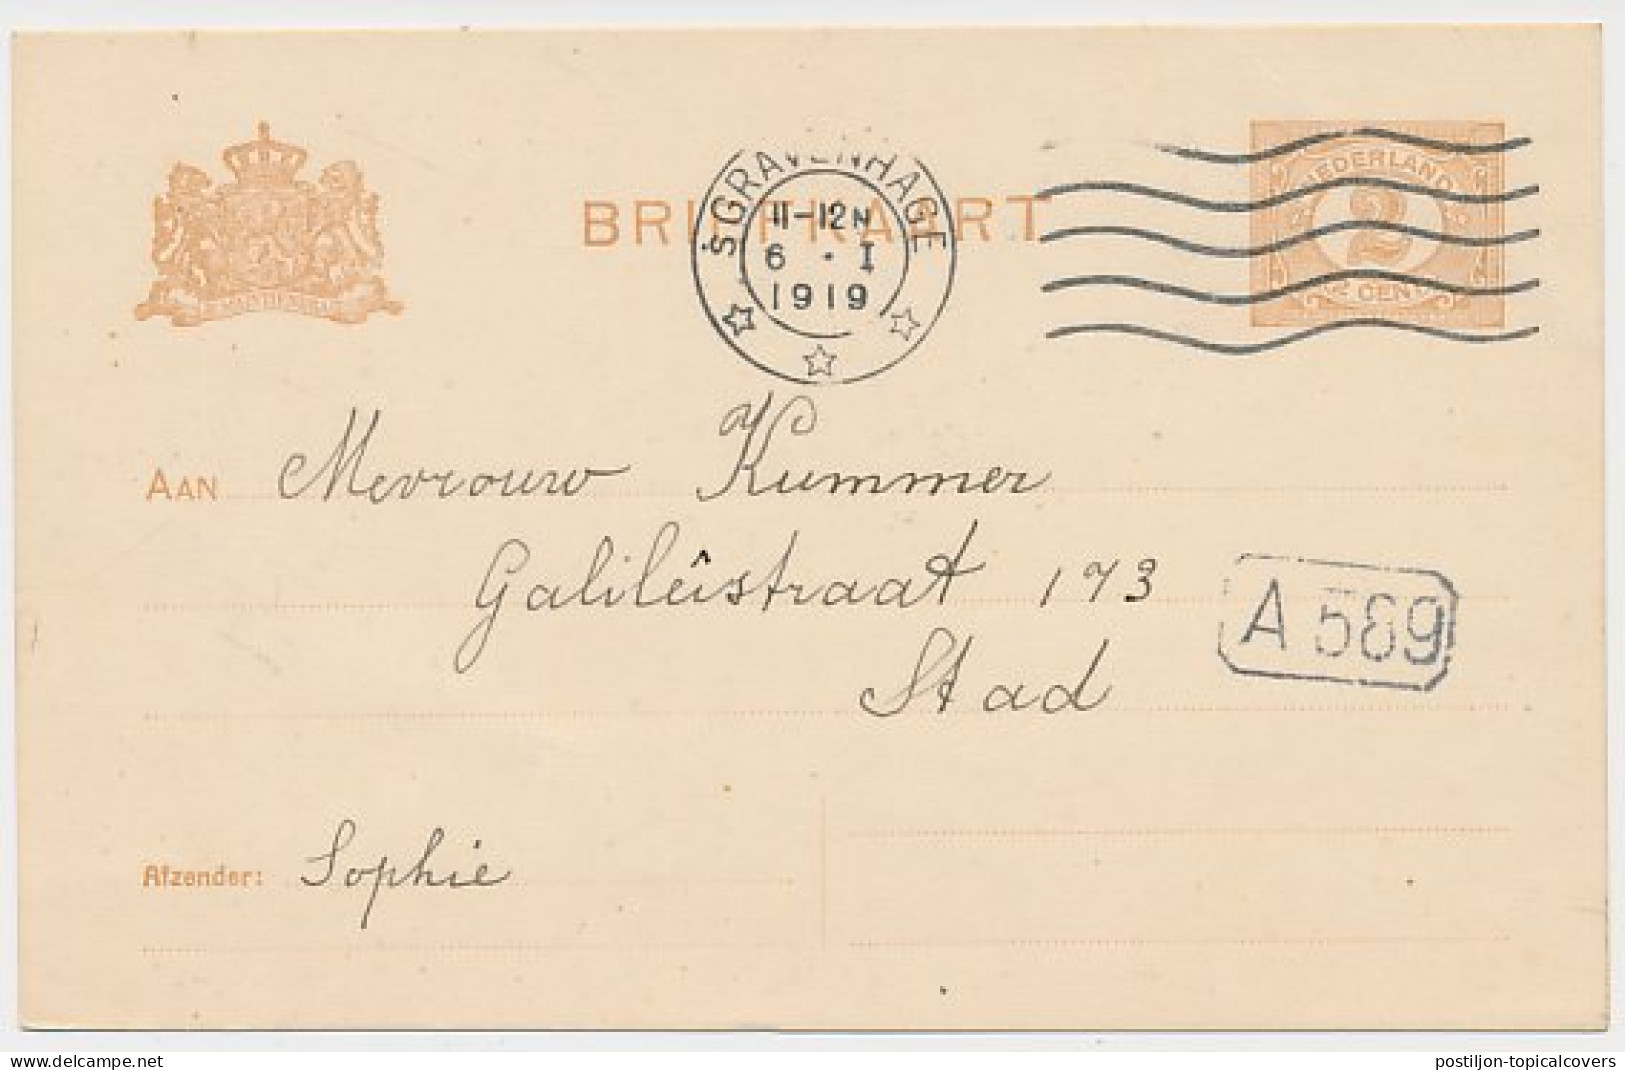 Briefkaart G. 88 A II Locaal Te S Gravenhage 1919 - Postal Stationery